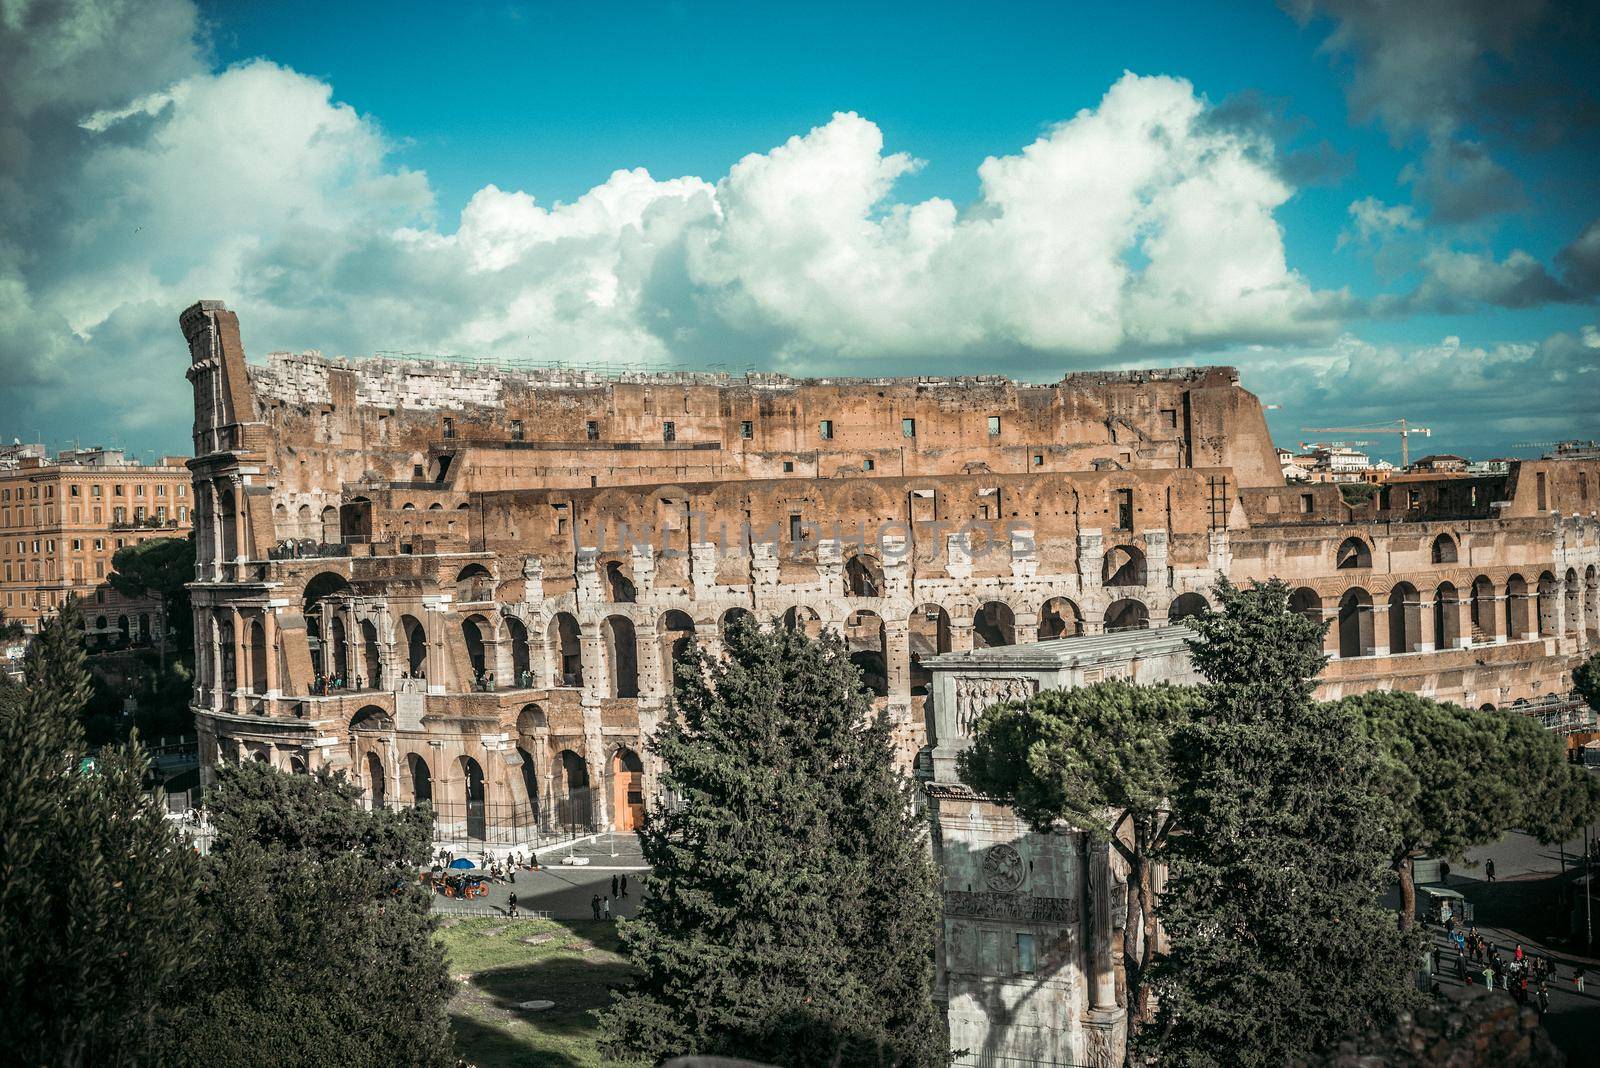 Colosseum in Rome by tan4ikk1